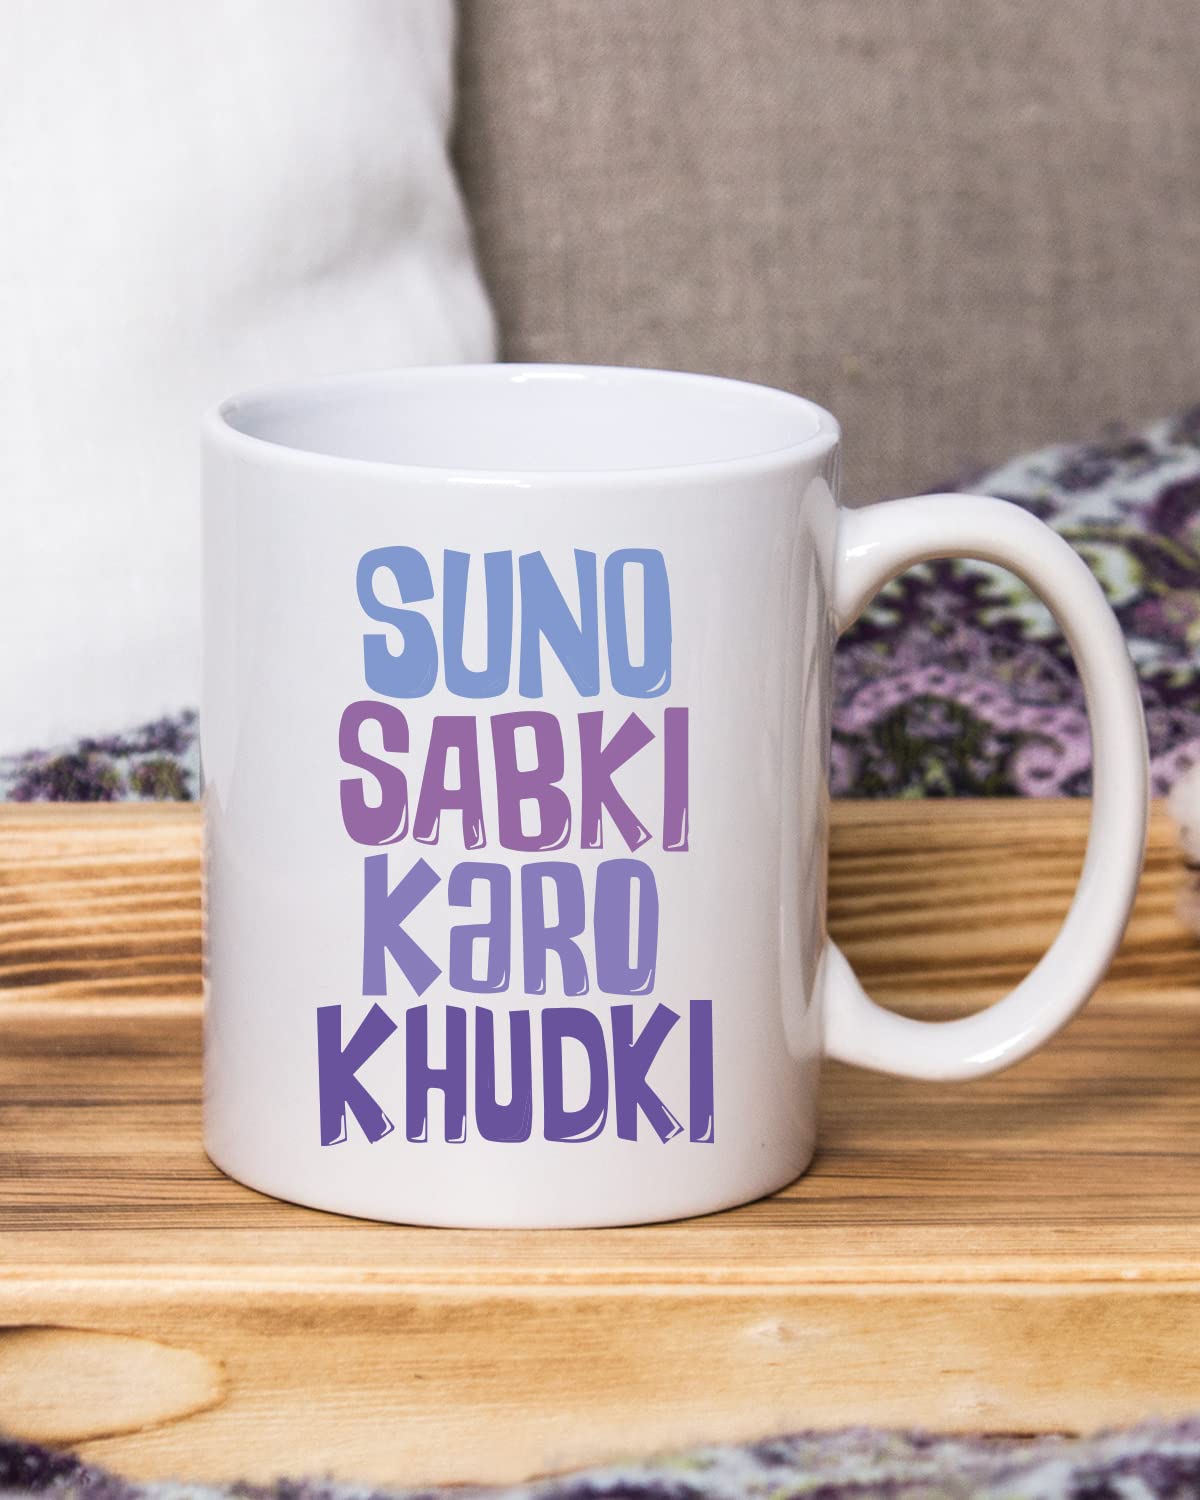 SUNO SABKI KARO KHUDKI Coffee Mug - Birthday Gift, Motivational Mug, Printed with Inspiring Quotes, Positivity Mug, Inspirational Gift for Him & Her, Best Friend Gift, Gifts for Her, Cheer Up Gift